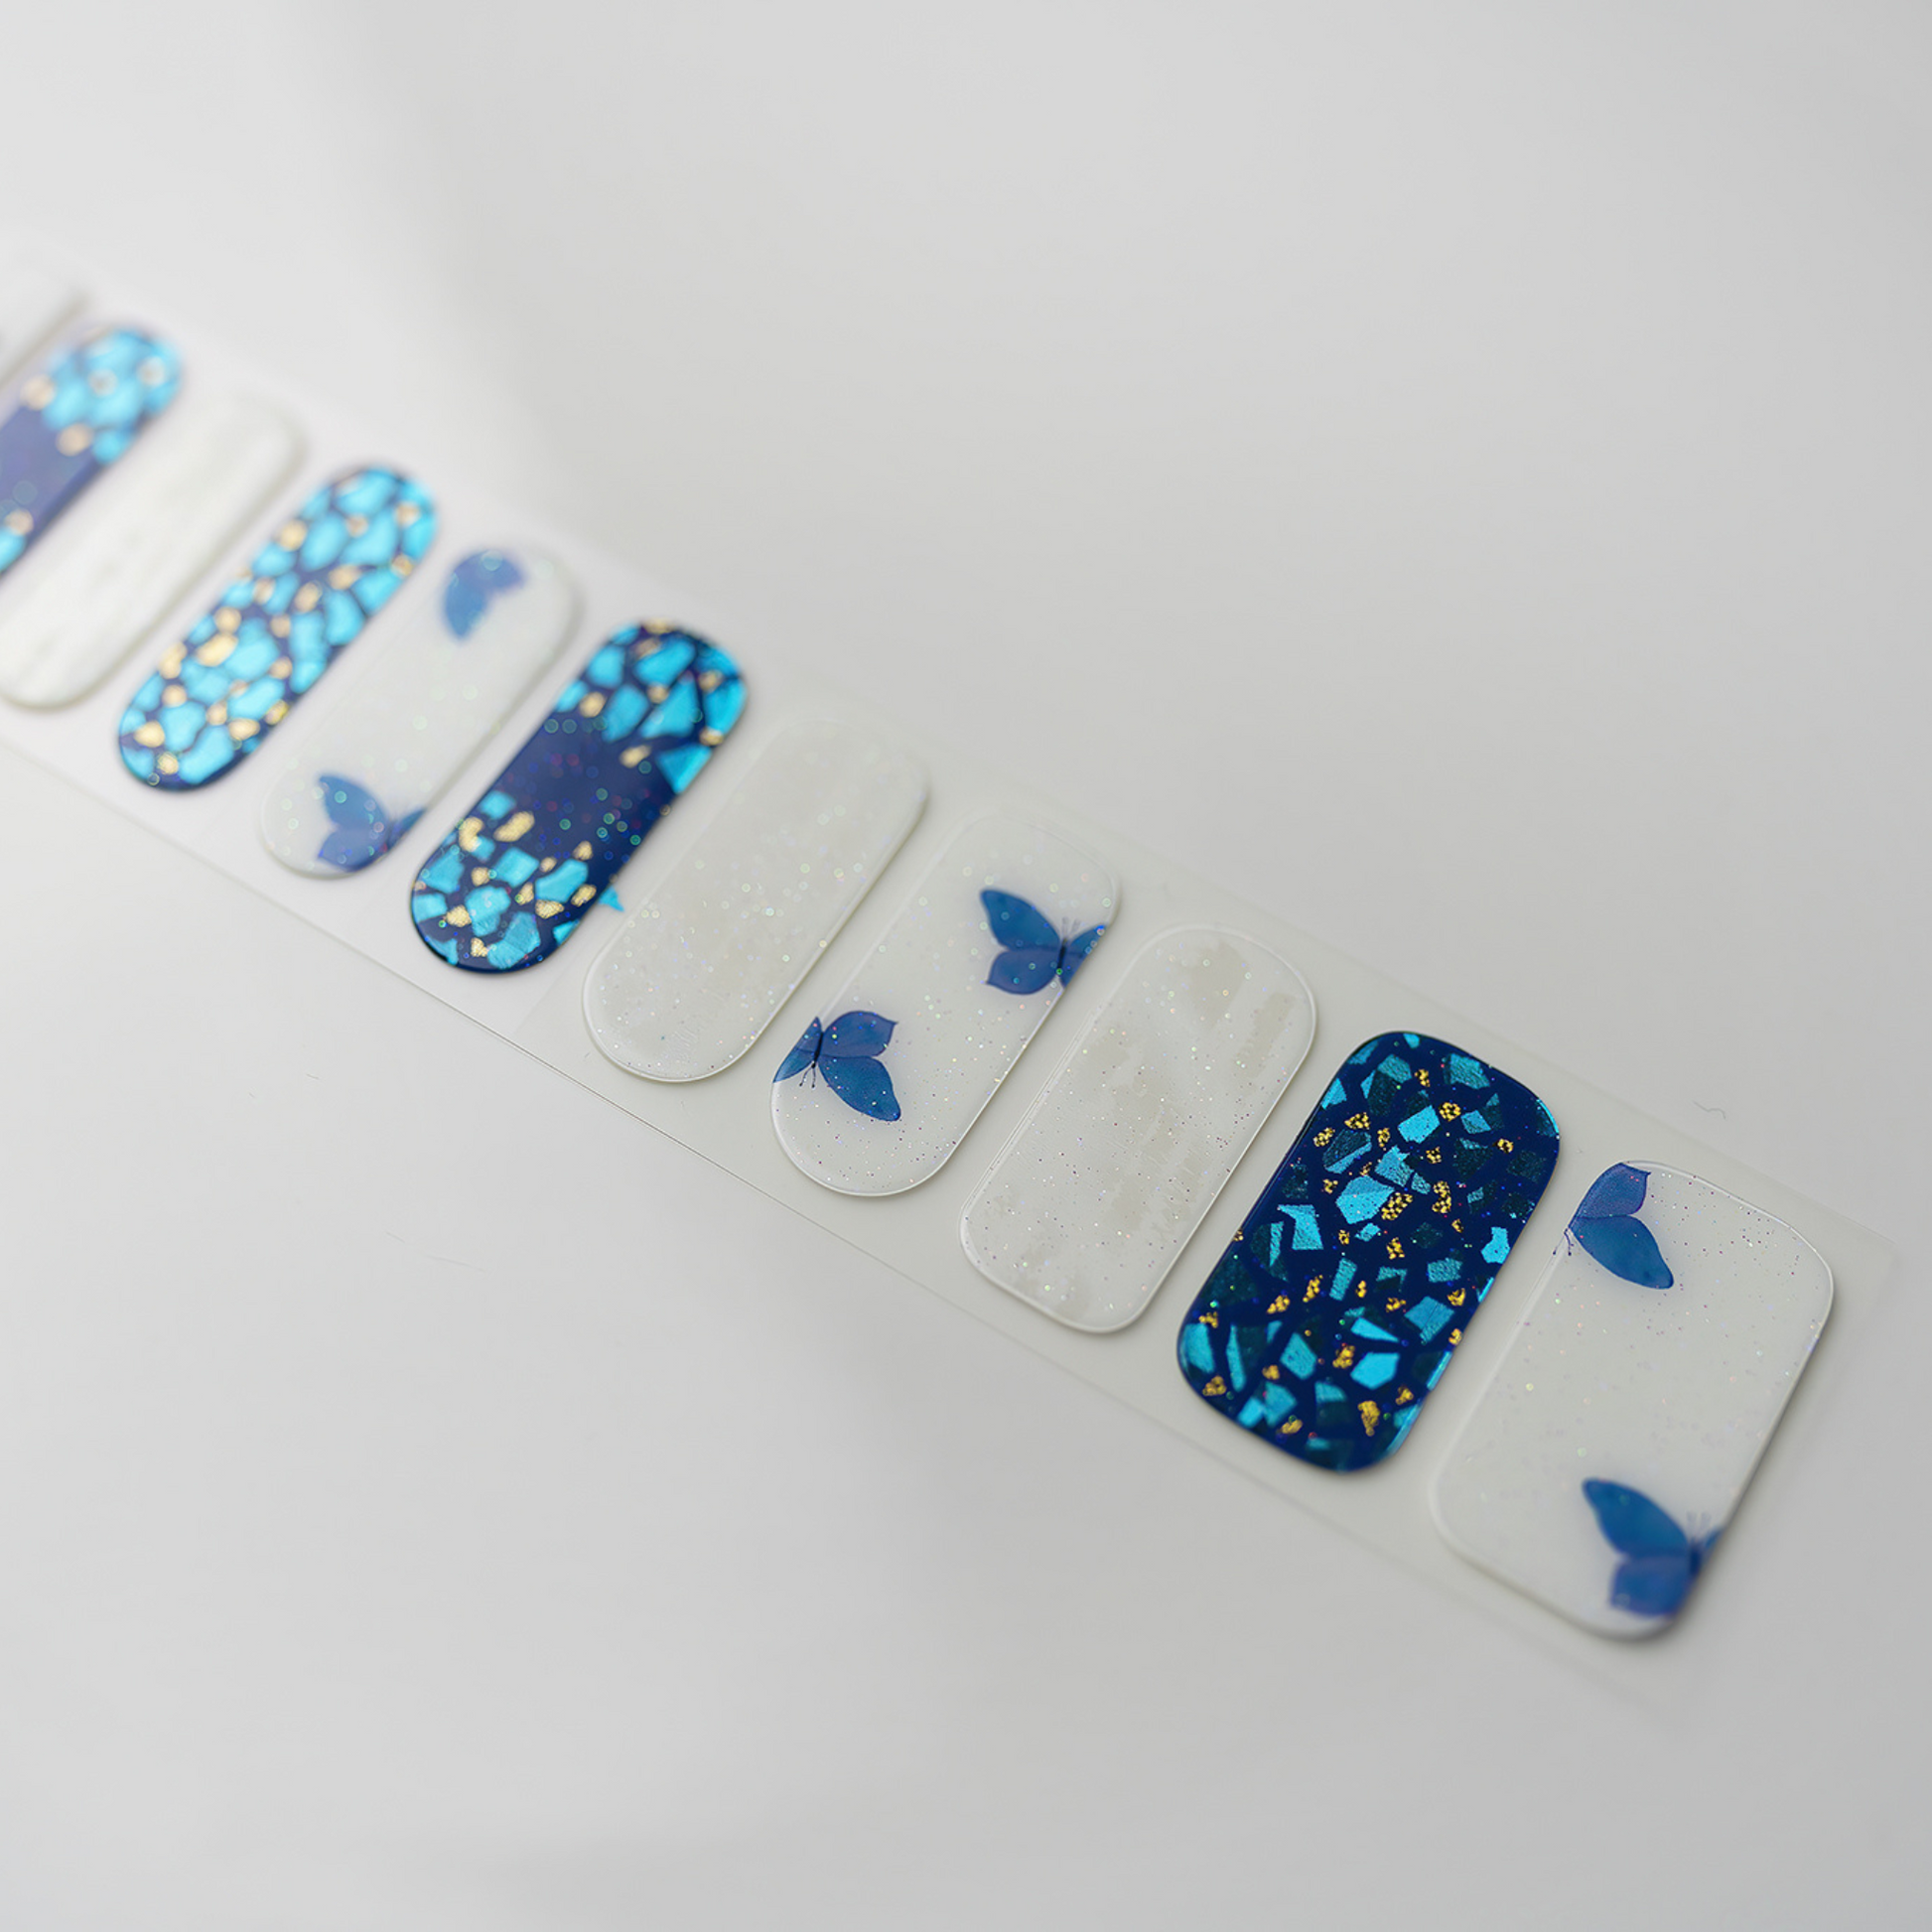 nail stickers nail polish stickers gel nail stickers gel nail wraps by Jelcie